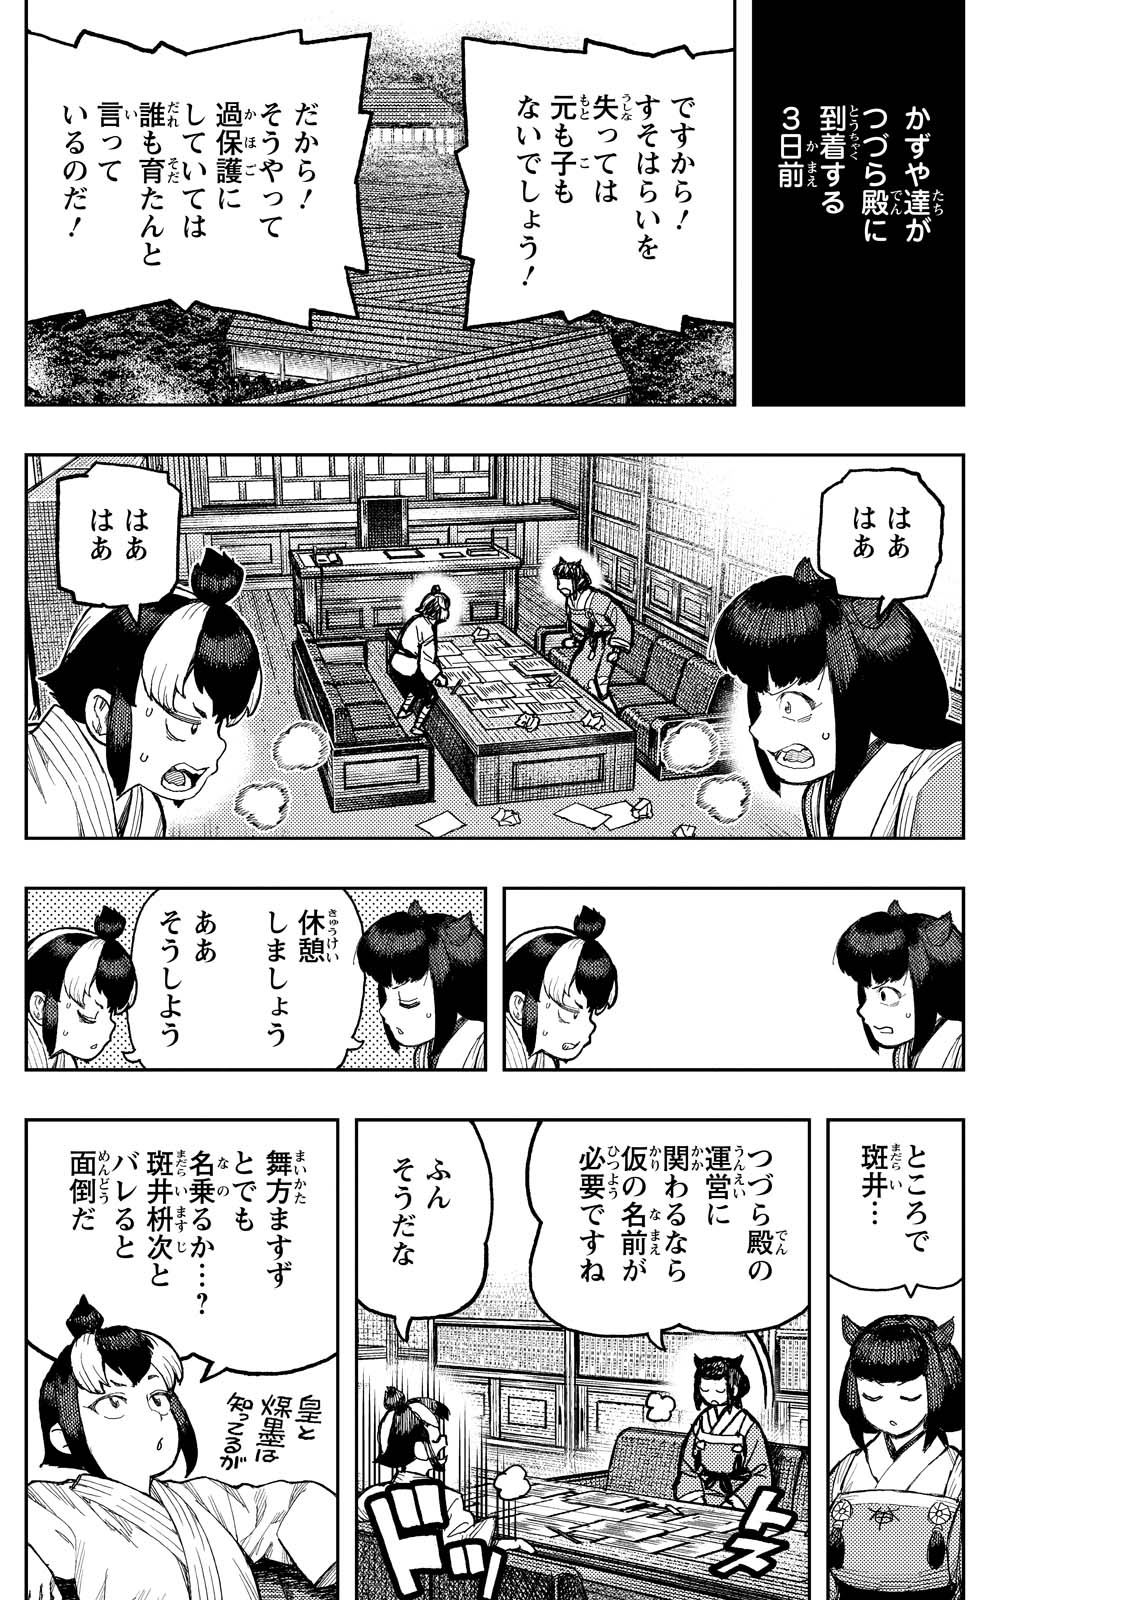 Tsugumomo - Chapter 169 - Page 2